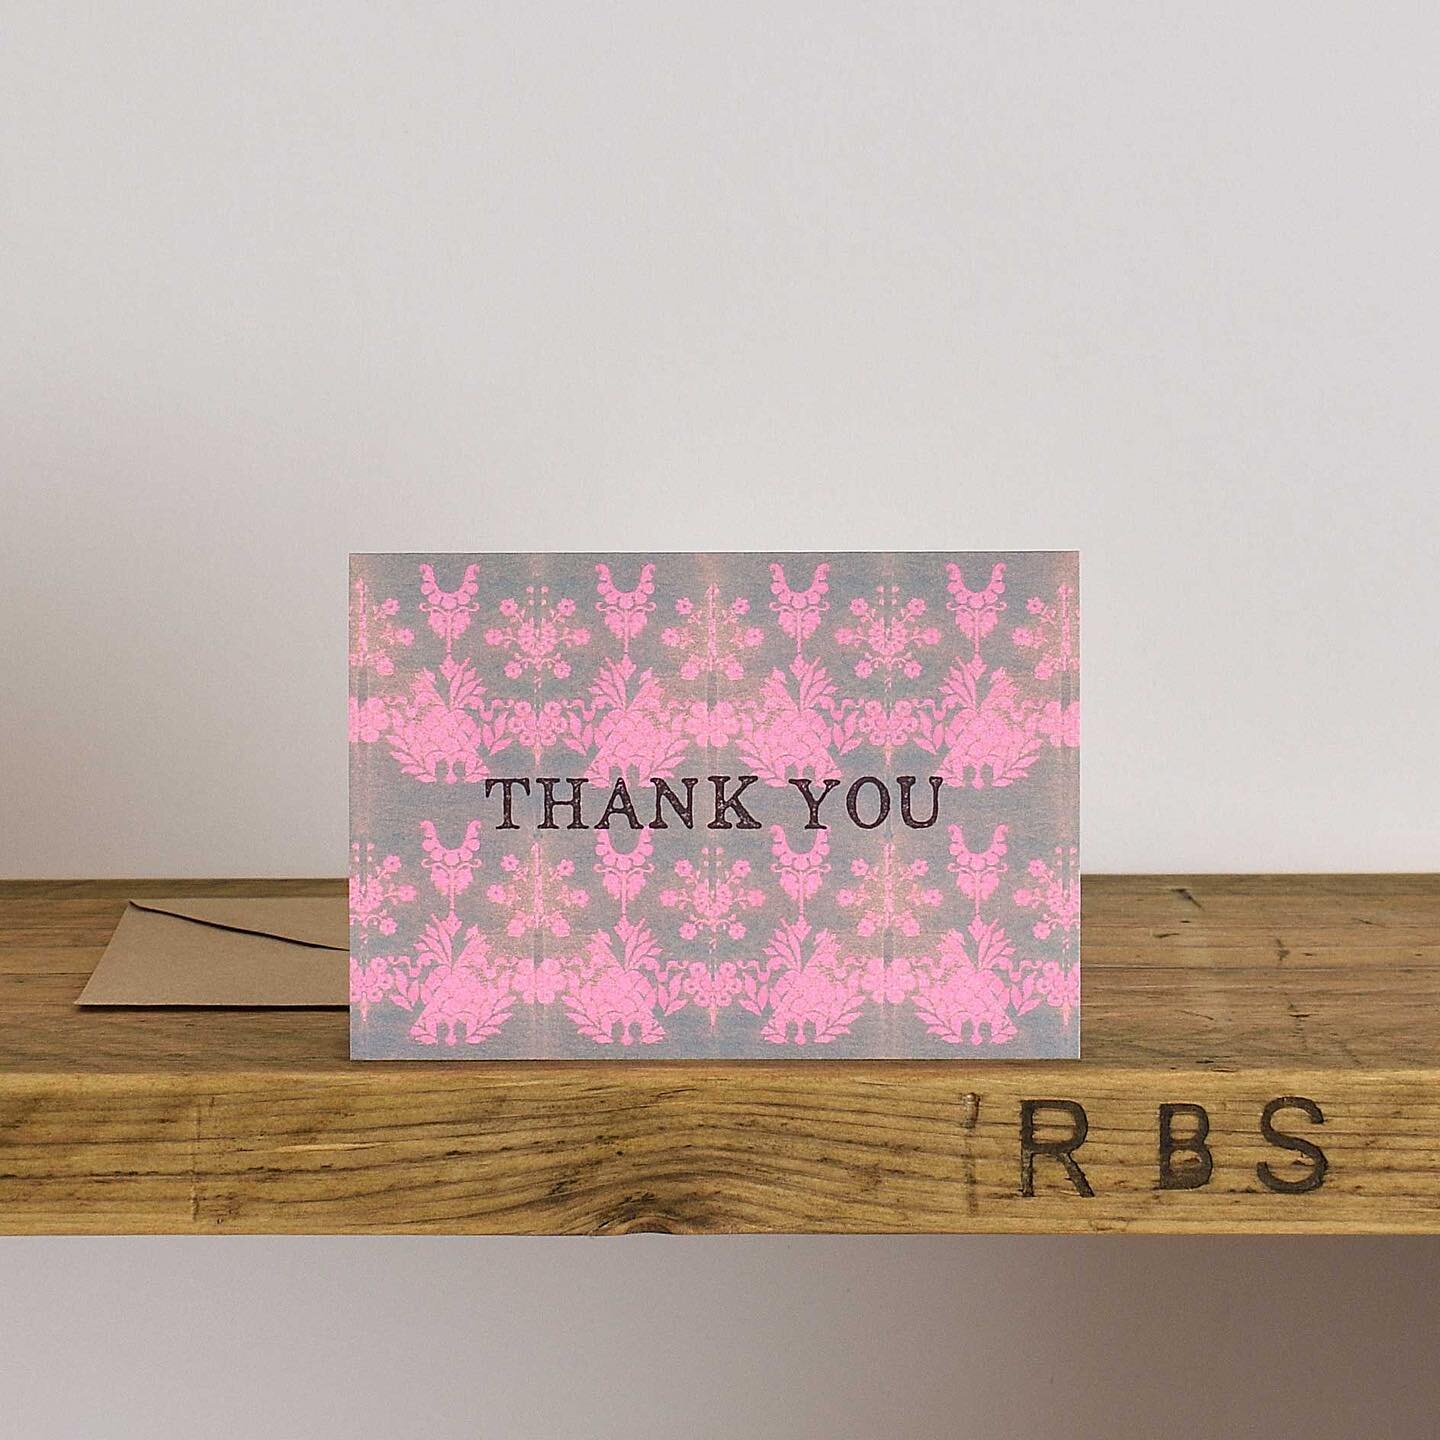 Thank you for the sunshine!💙

#thankyou #pinkandblue #thankyoucards #beautifulothernesscards #wimborneminster